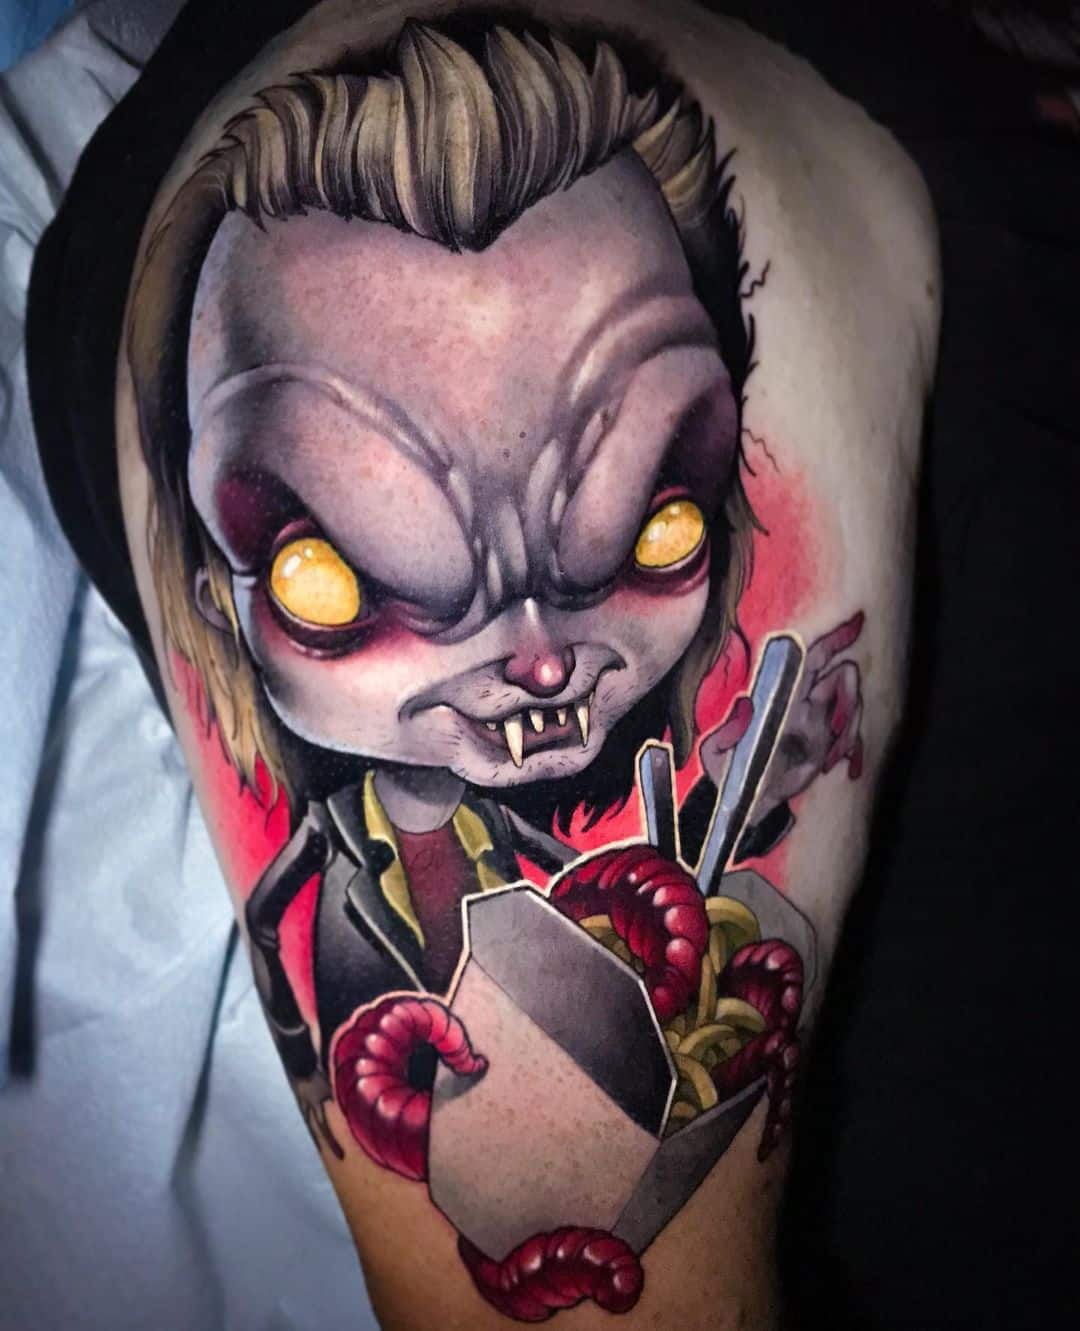 kelly-doty-tattoo-artist-tattoo-horror-monster